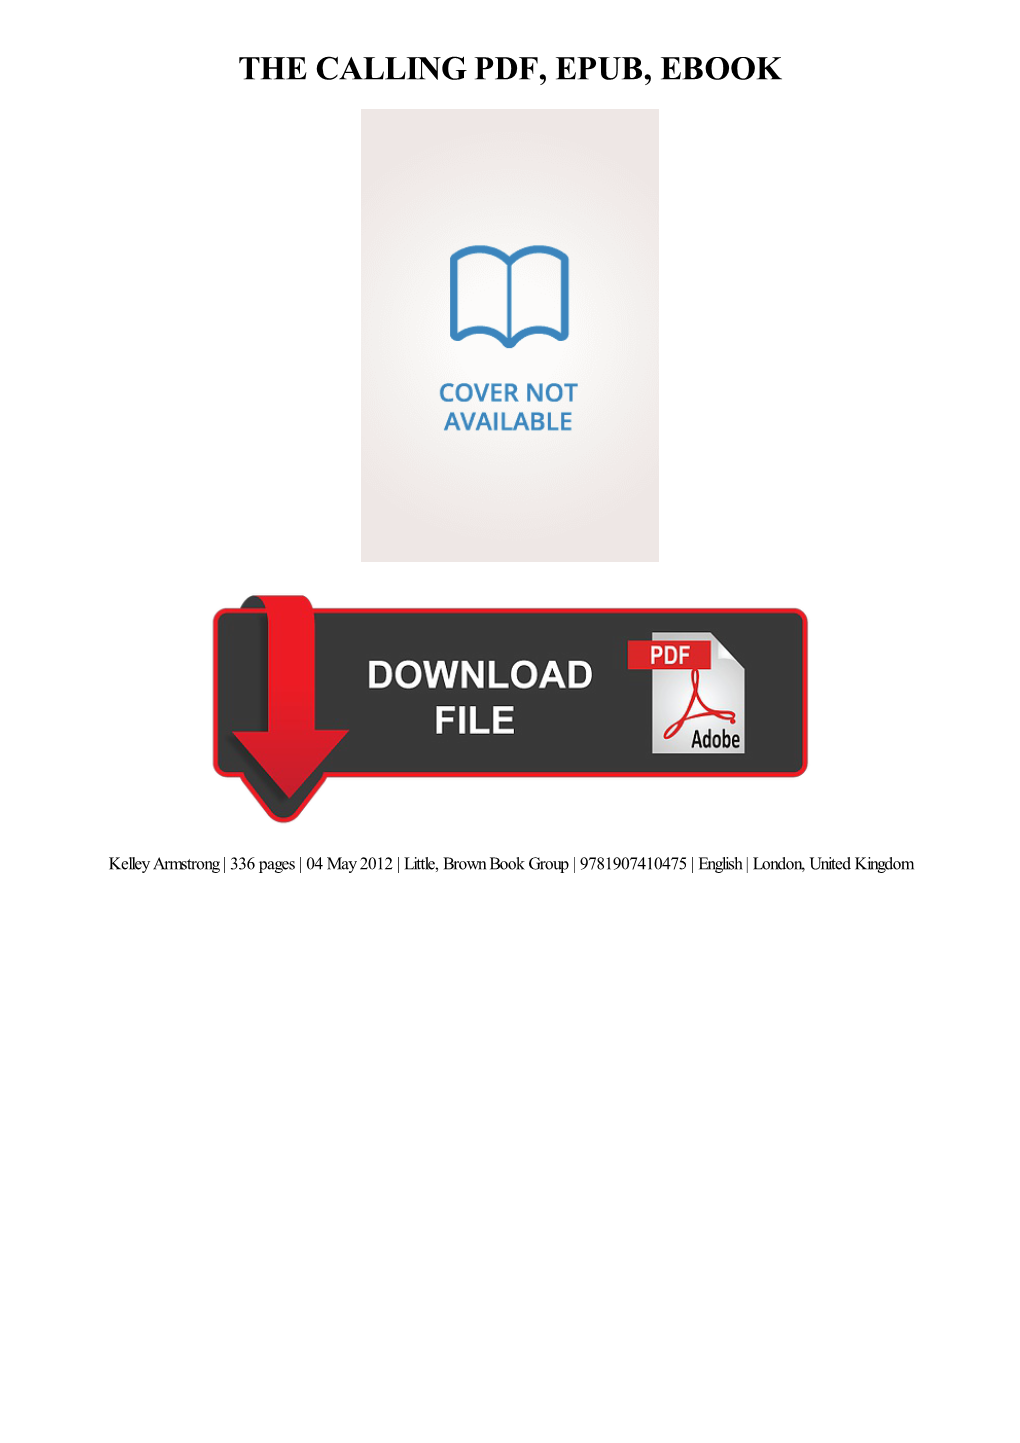 The Calling PDF Book